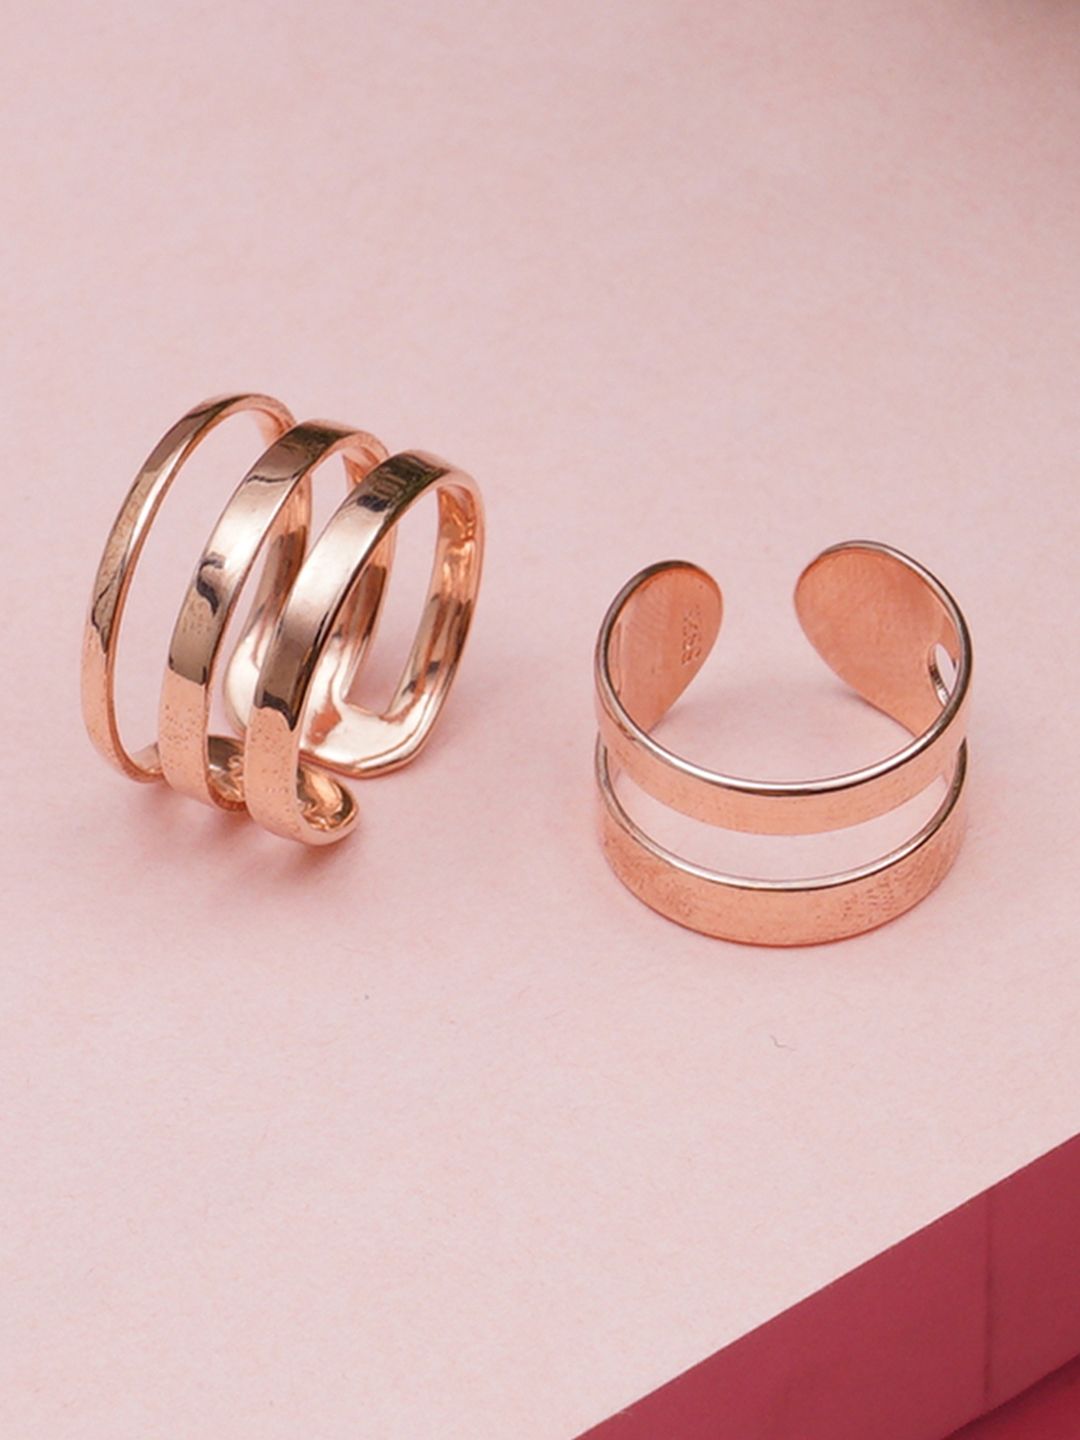 KARATCART Set of 2 Rose Gold-Plated Elegant Couple Adjustable Band Ring Price in India